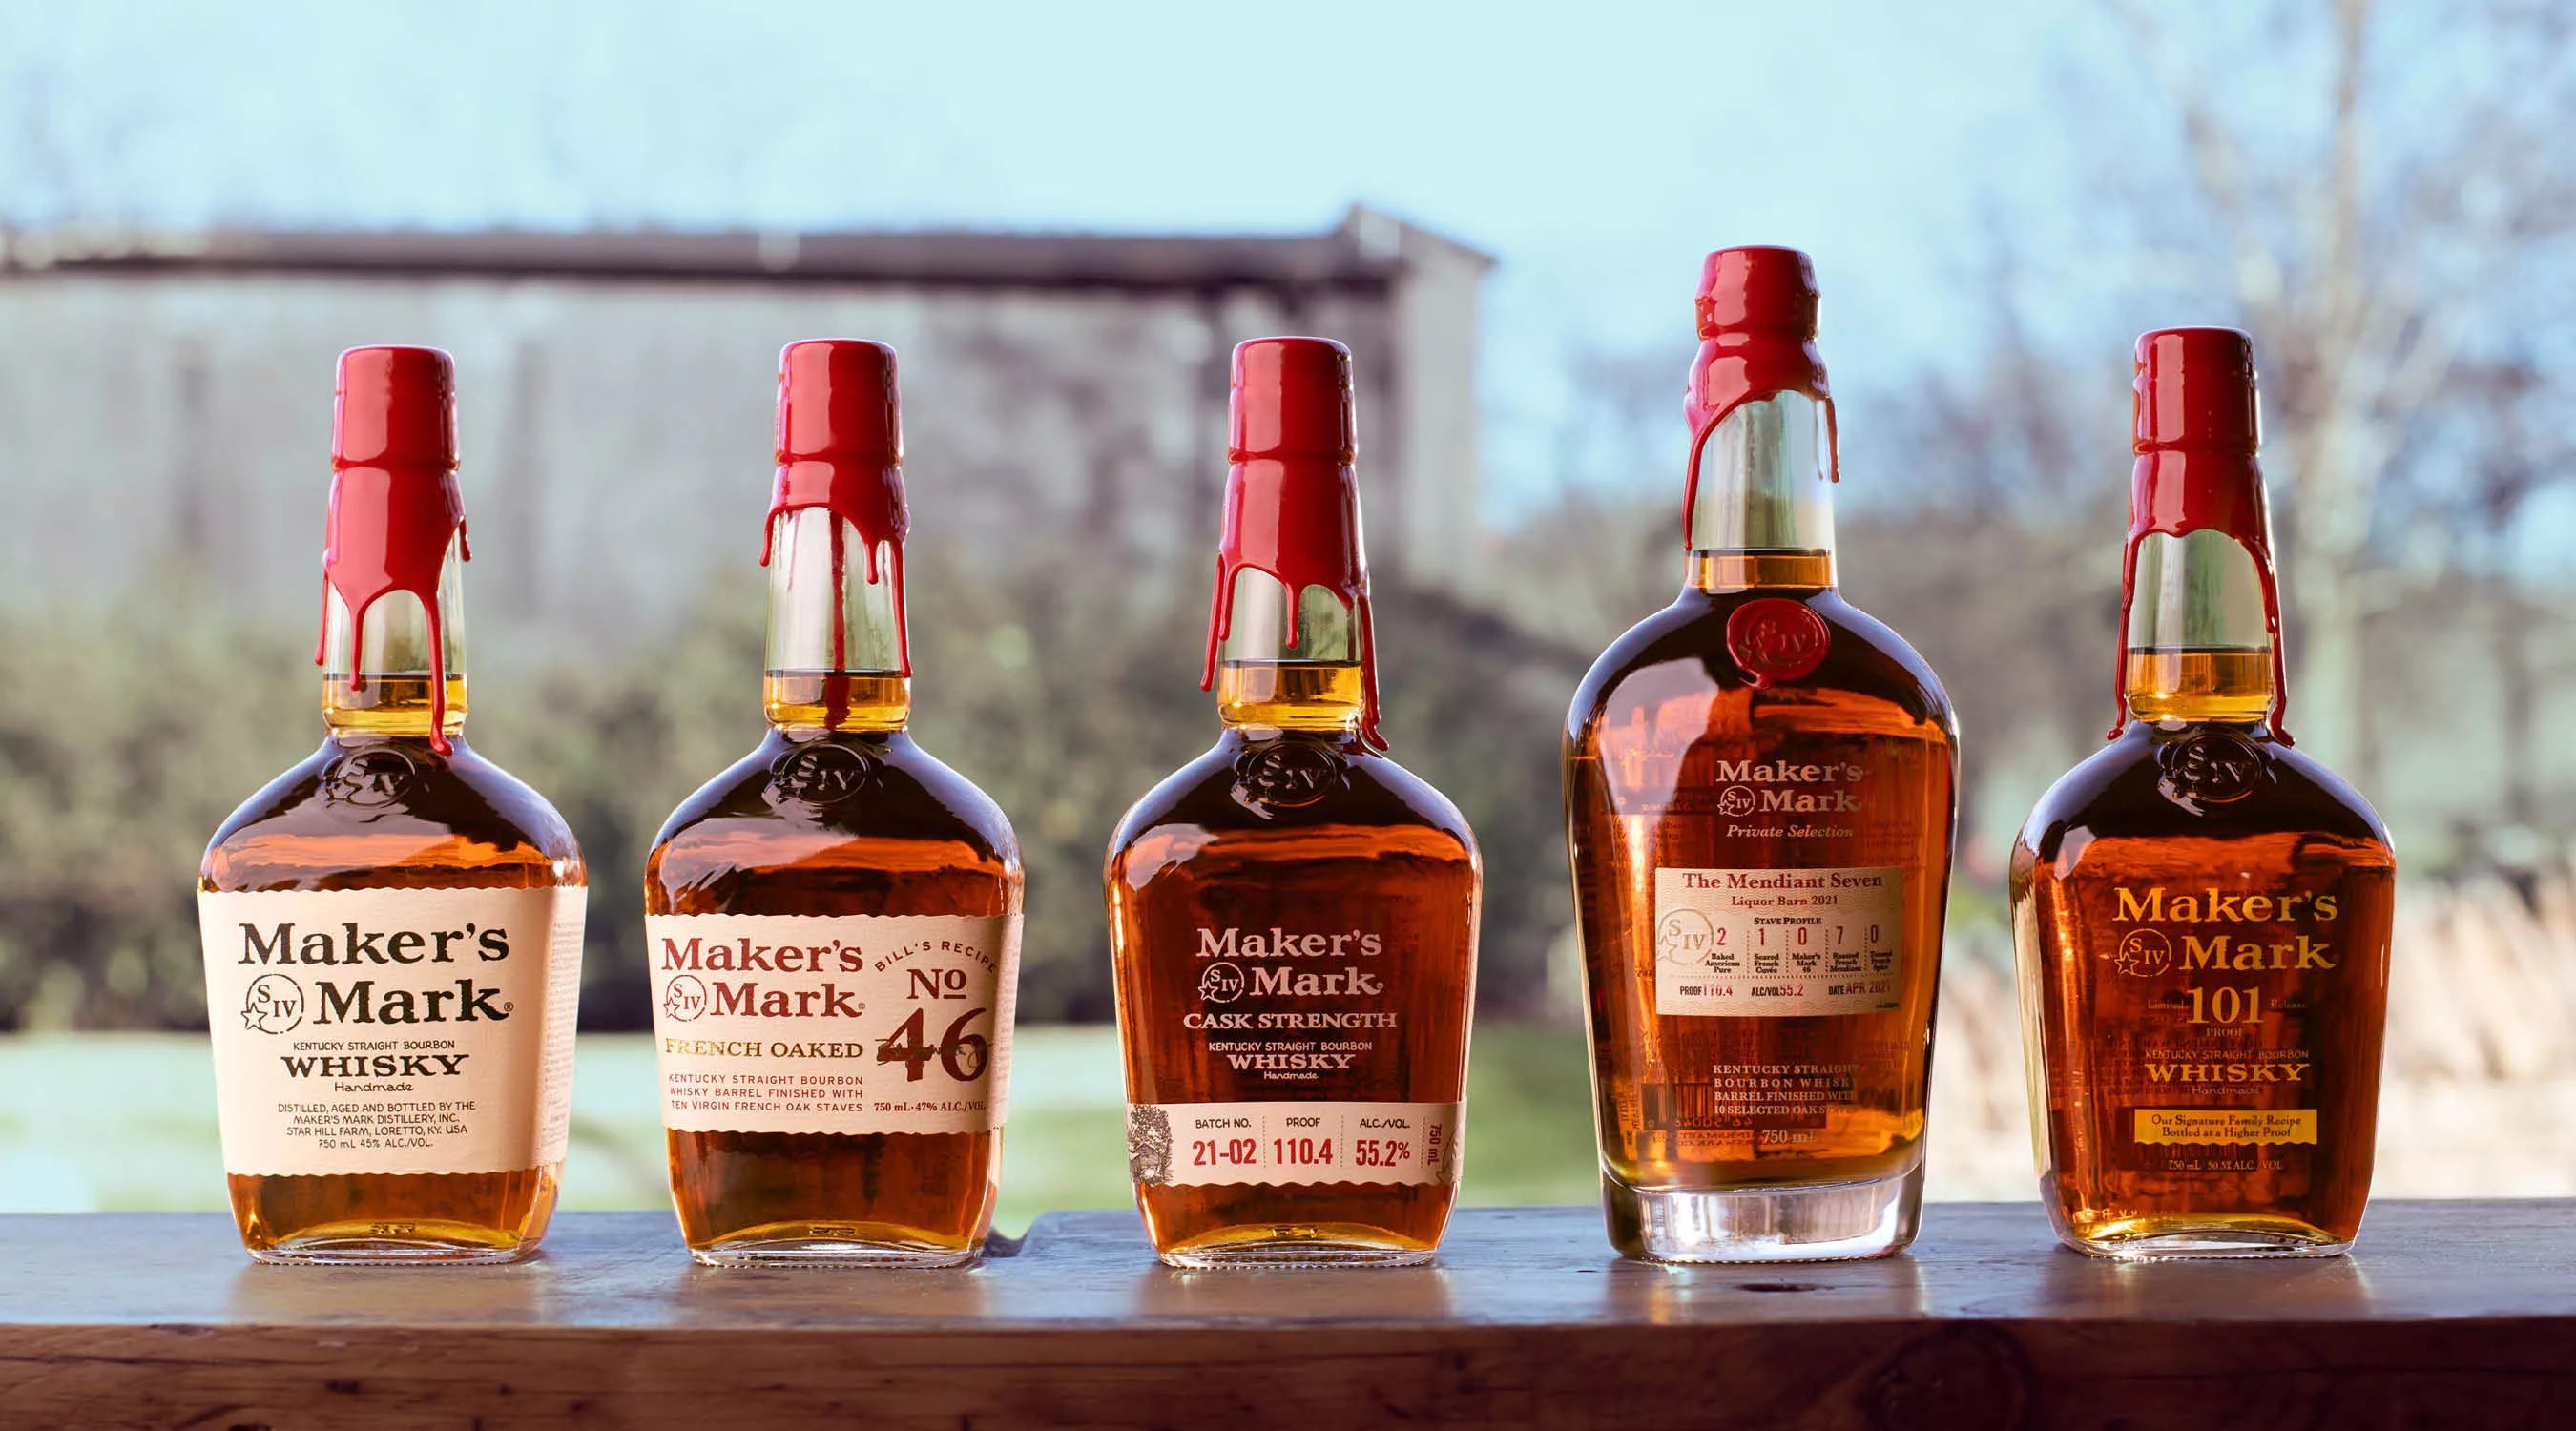 Makers Mark Miniature Bourbon Whiskey Box - Buy Online - Max Liquor